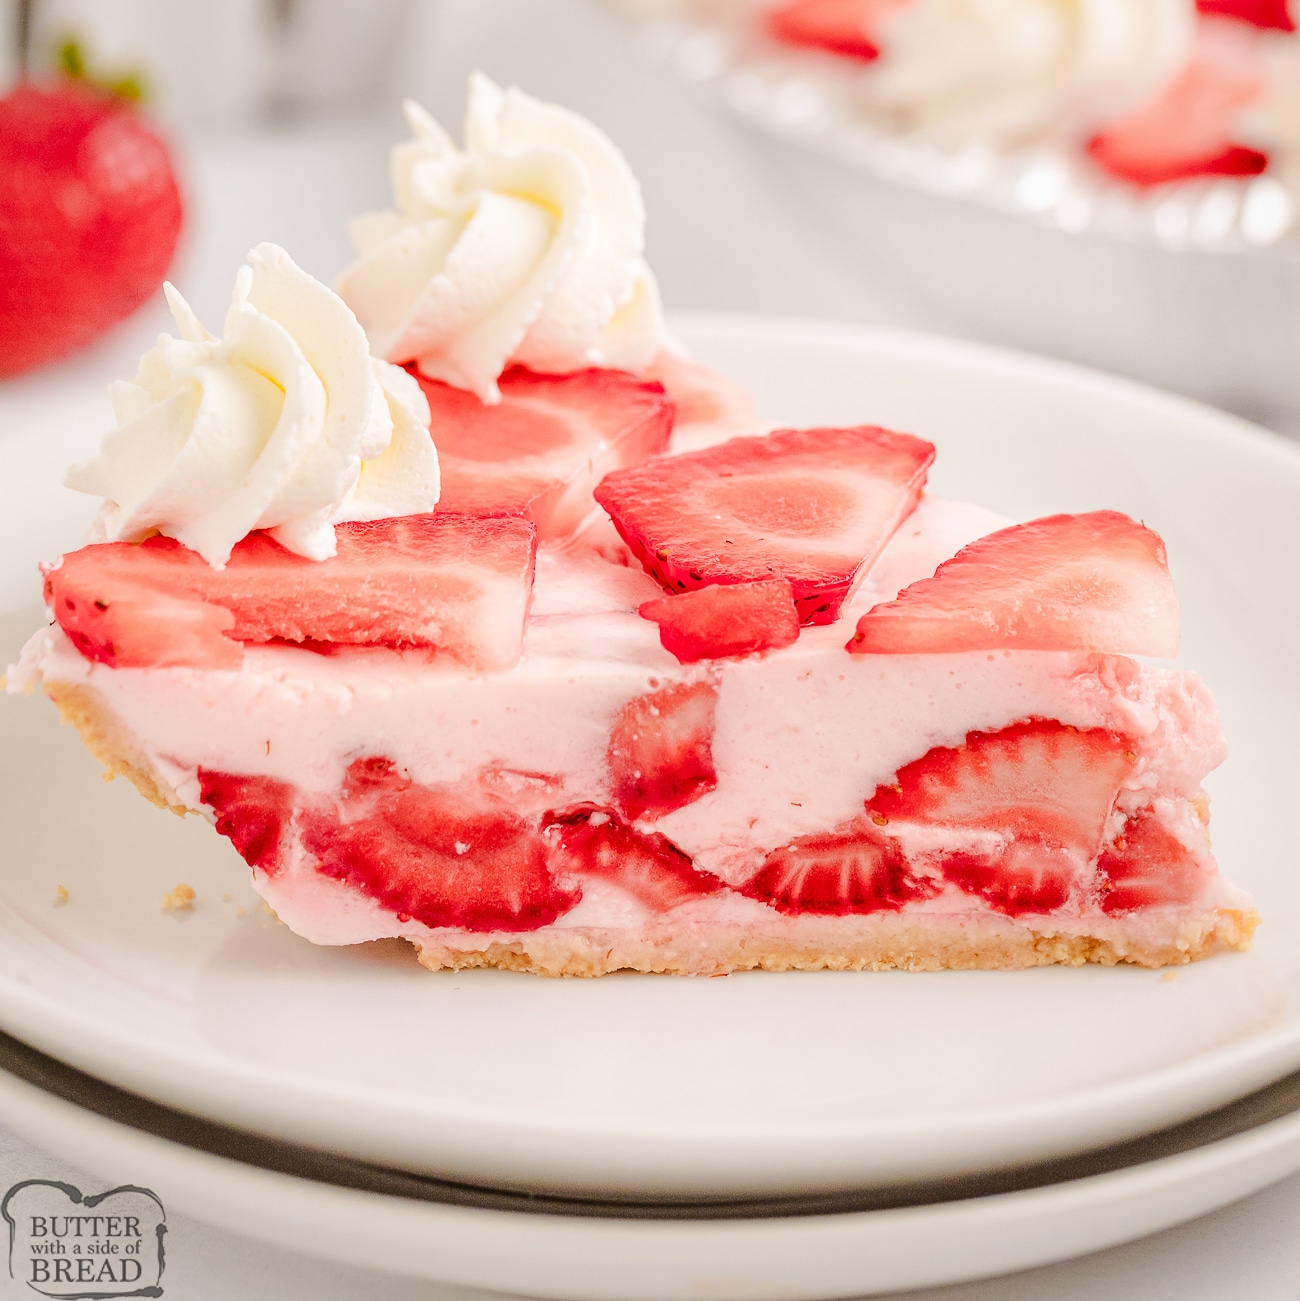 slice of strawberries and cream pie